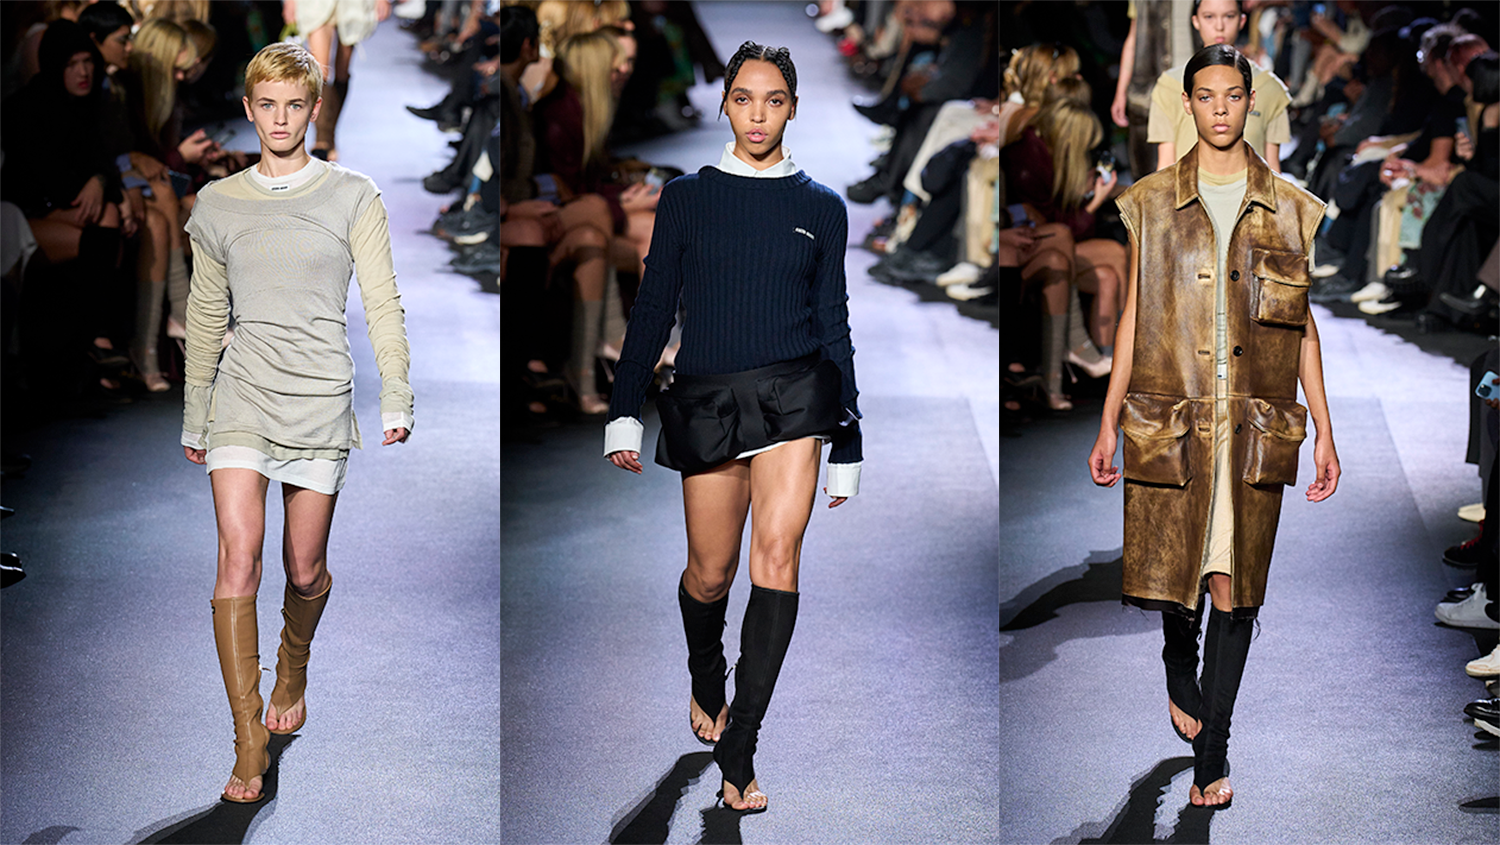 Louis Vuitton brings more glitz and glamour on Paris catwalk